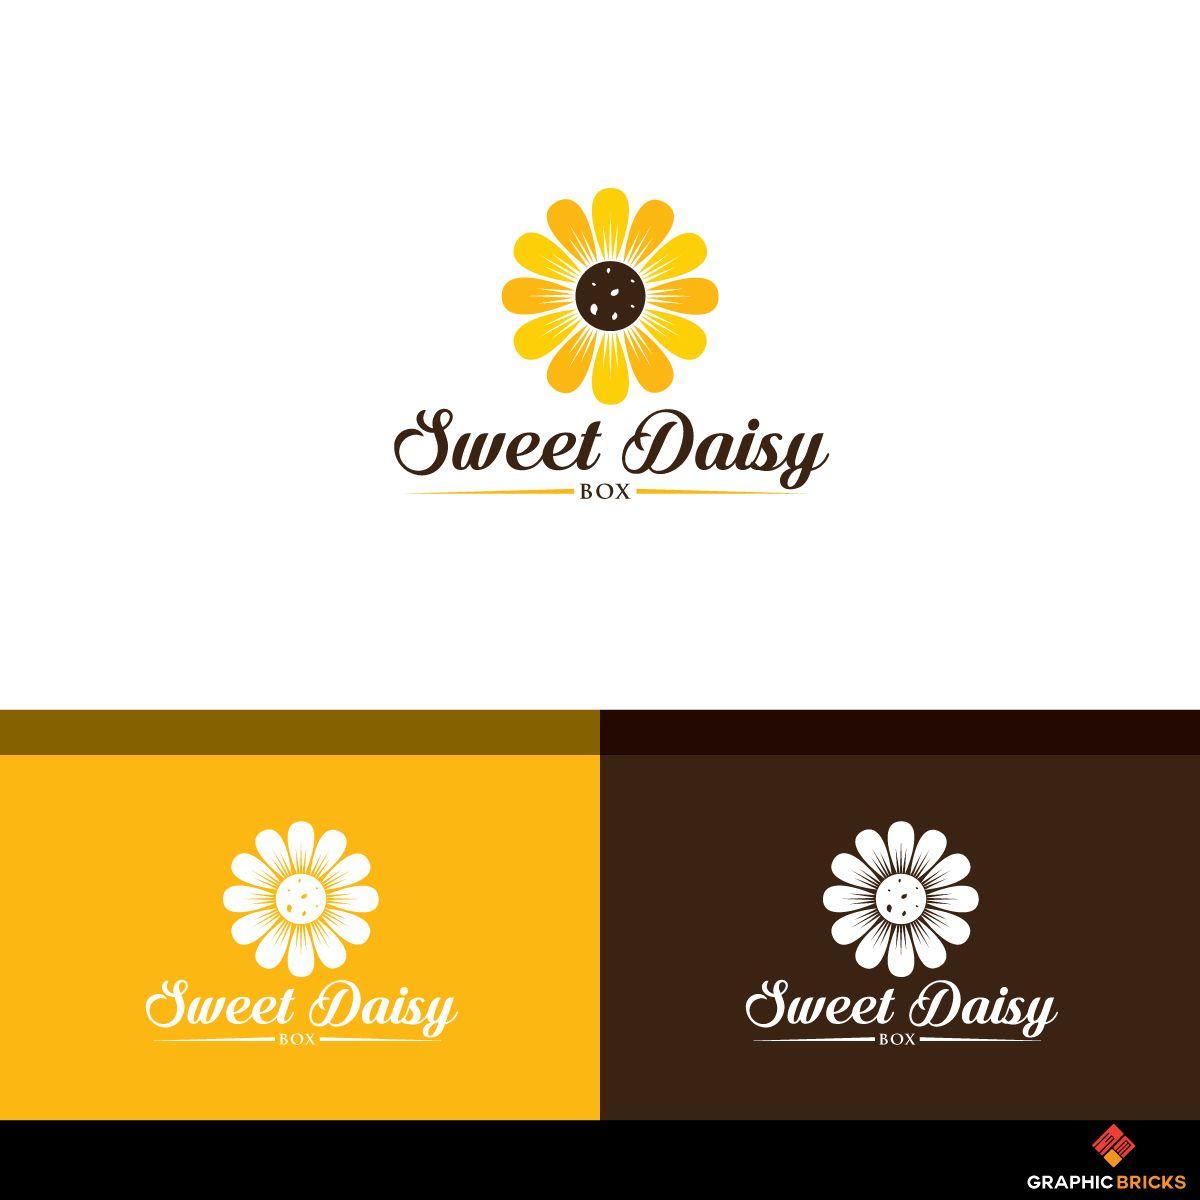 Daisy Brand Logo - Elegant, Playful, It Company Logo Design for Sweet Daisy Box